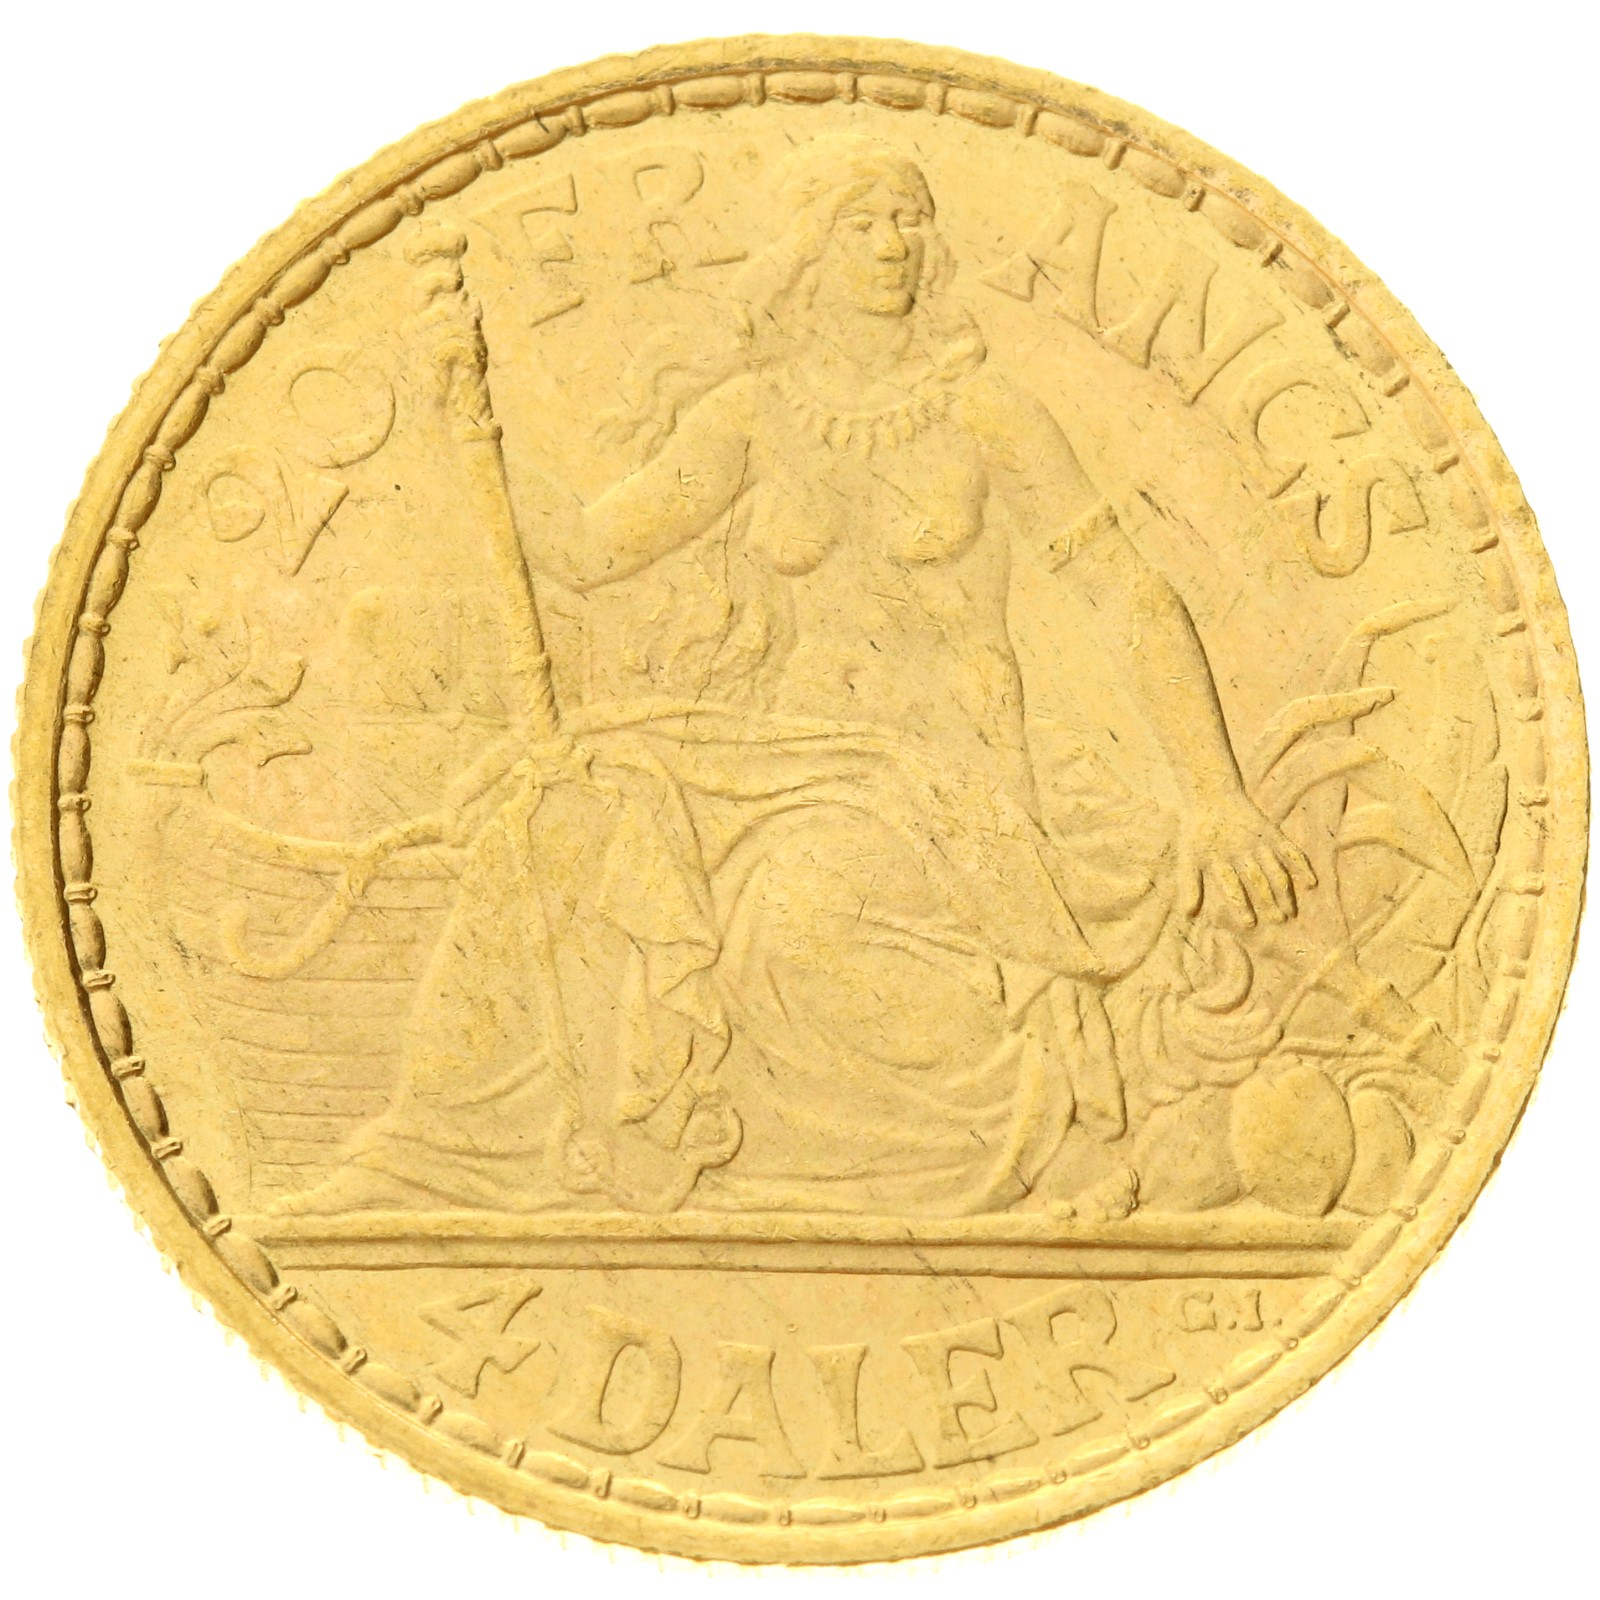 Danish West Indies - 4 daler/20 francs - 1904 - Christian IX 